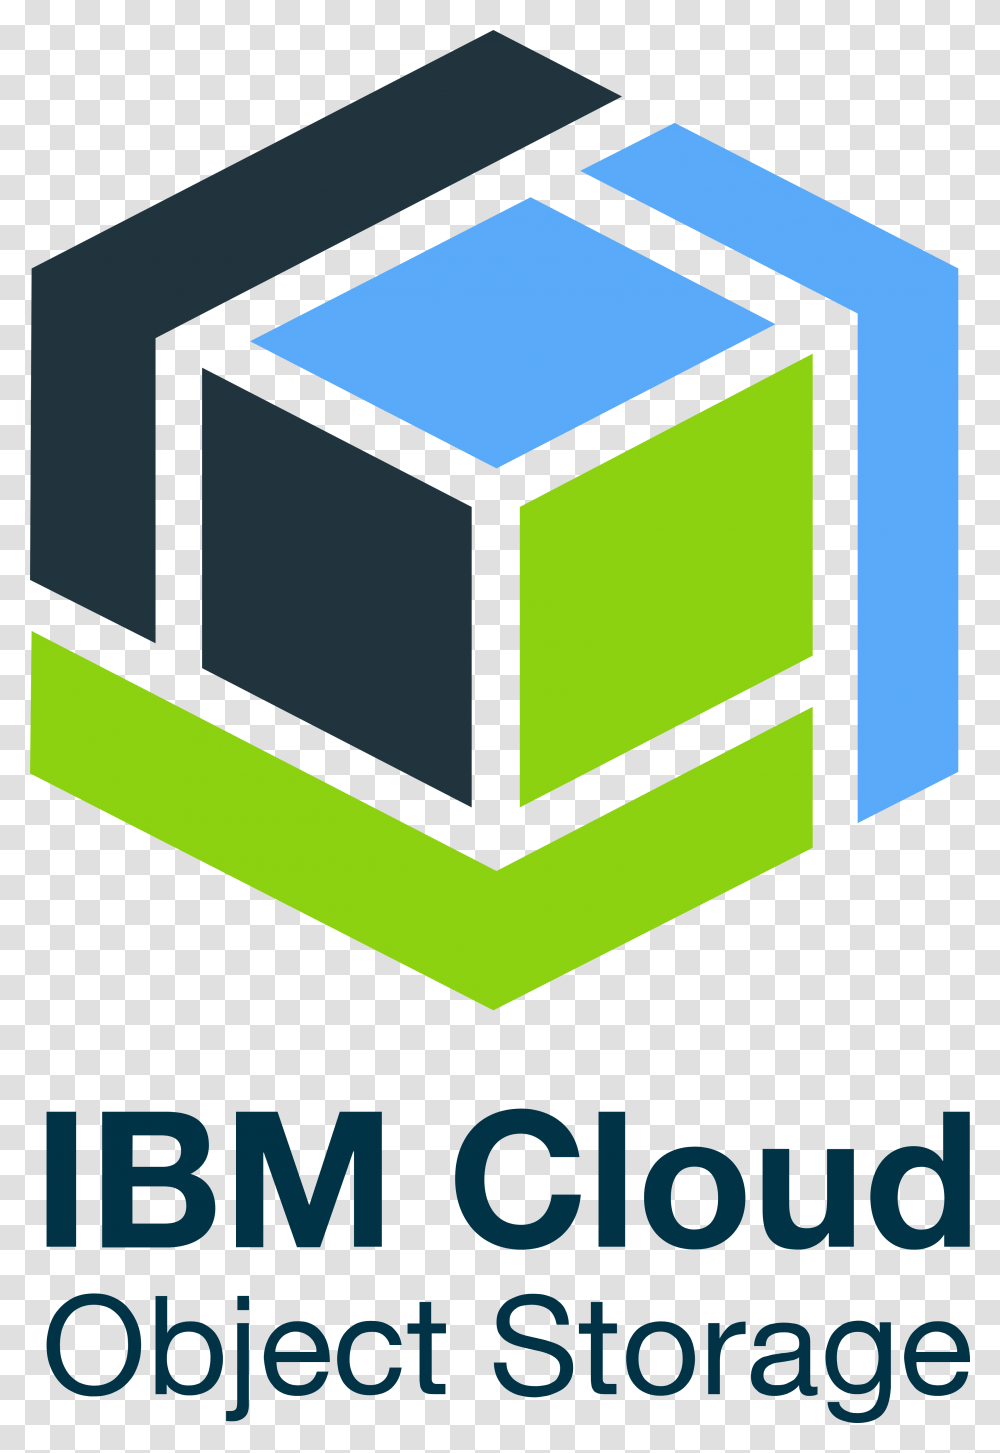 Ibm Cloud Object Storage Logo Ibm Cloud Object Storage, Rubix Cube, Graphics, Art, Poster Transparent Png